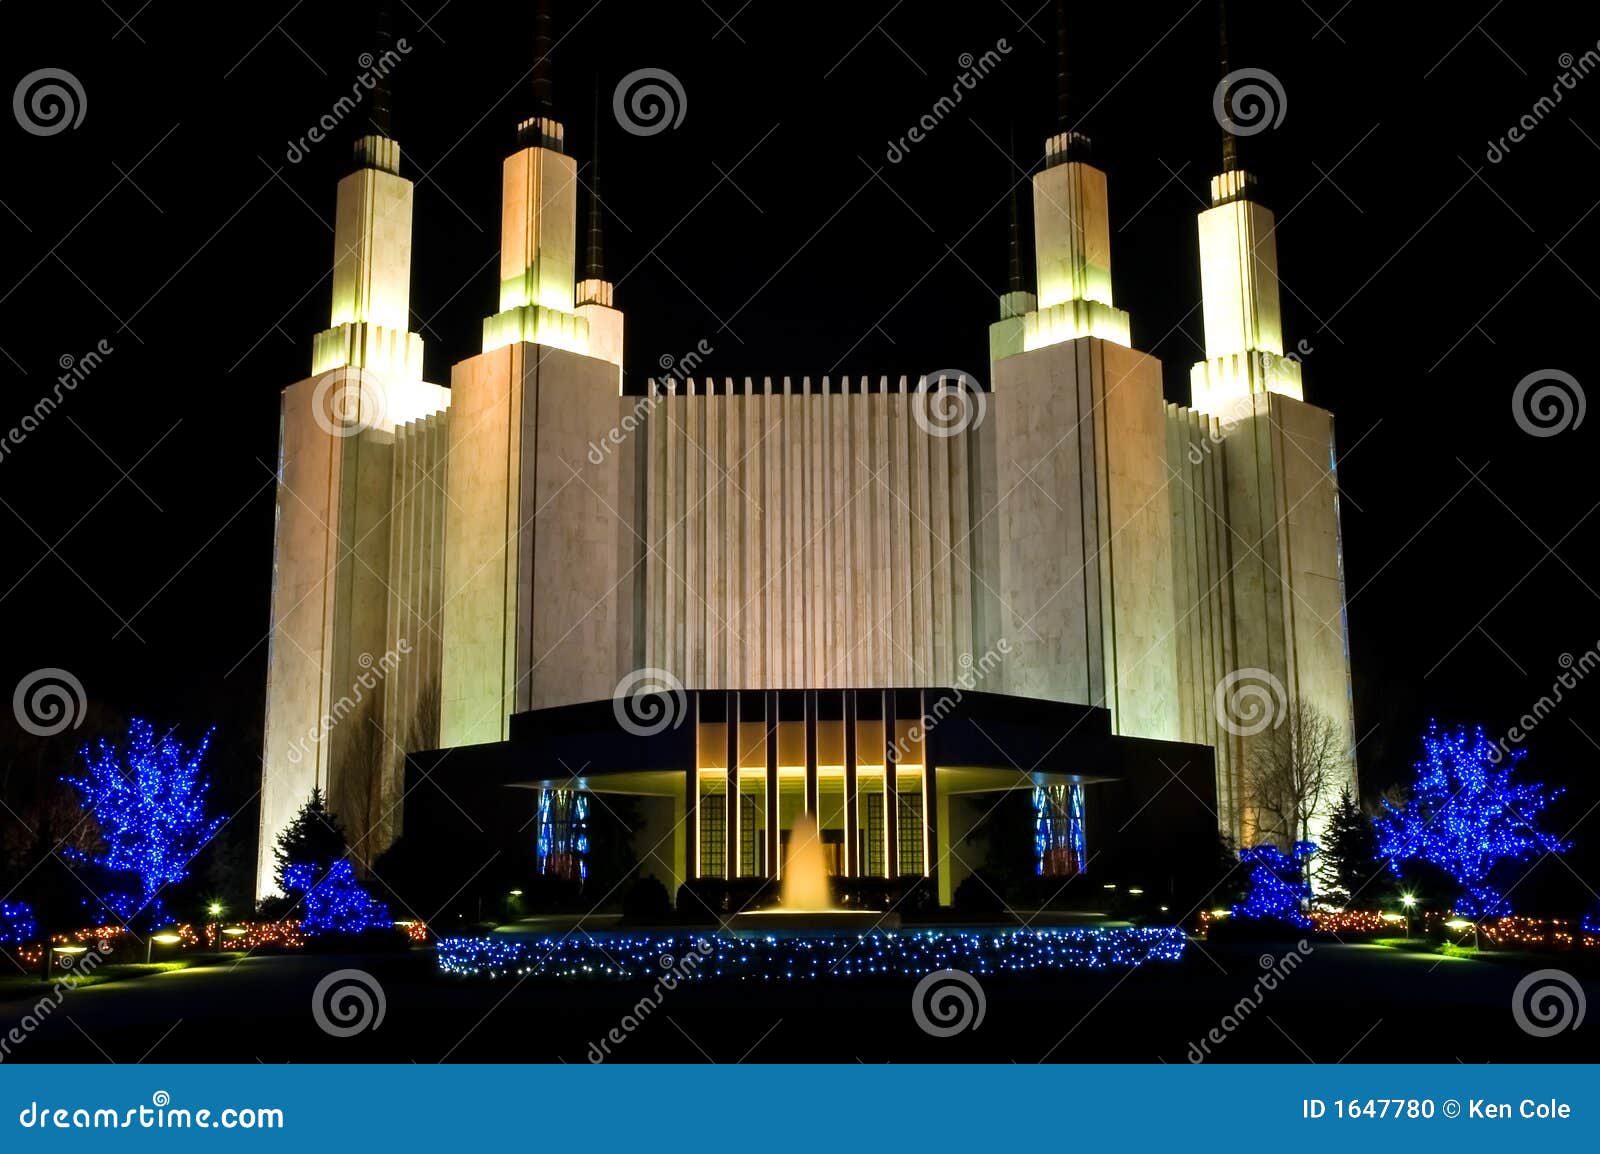 mormon temple - washington dc - 2